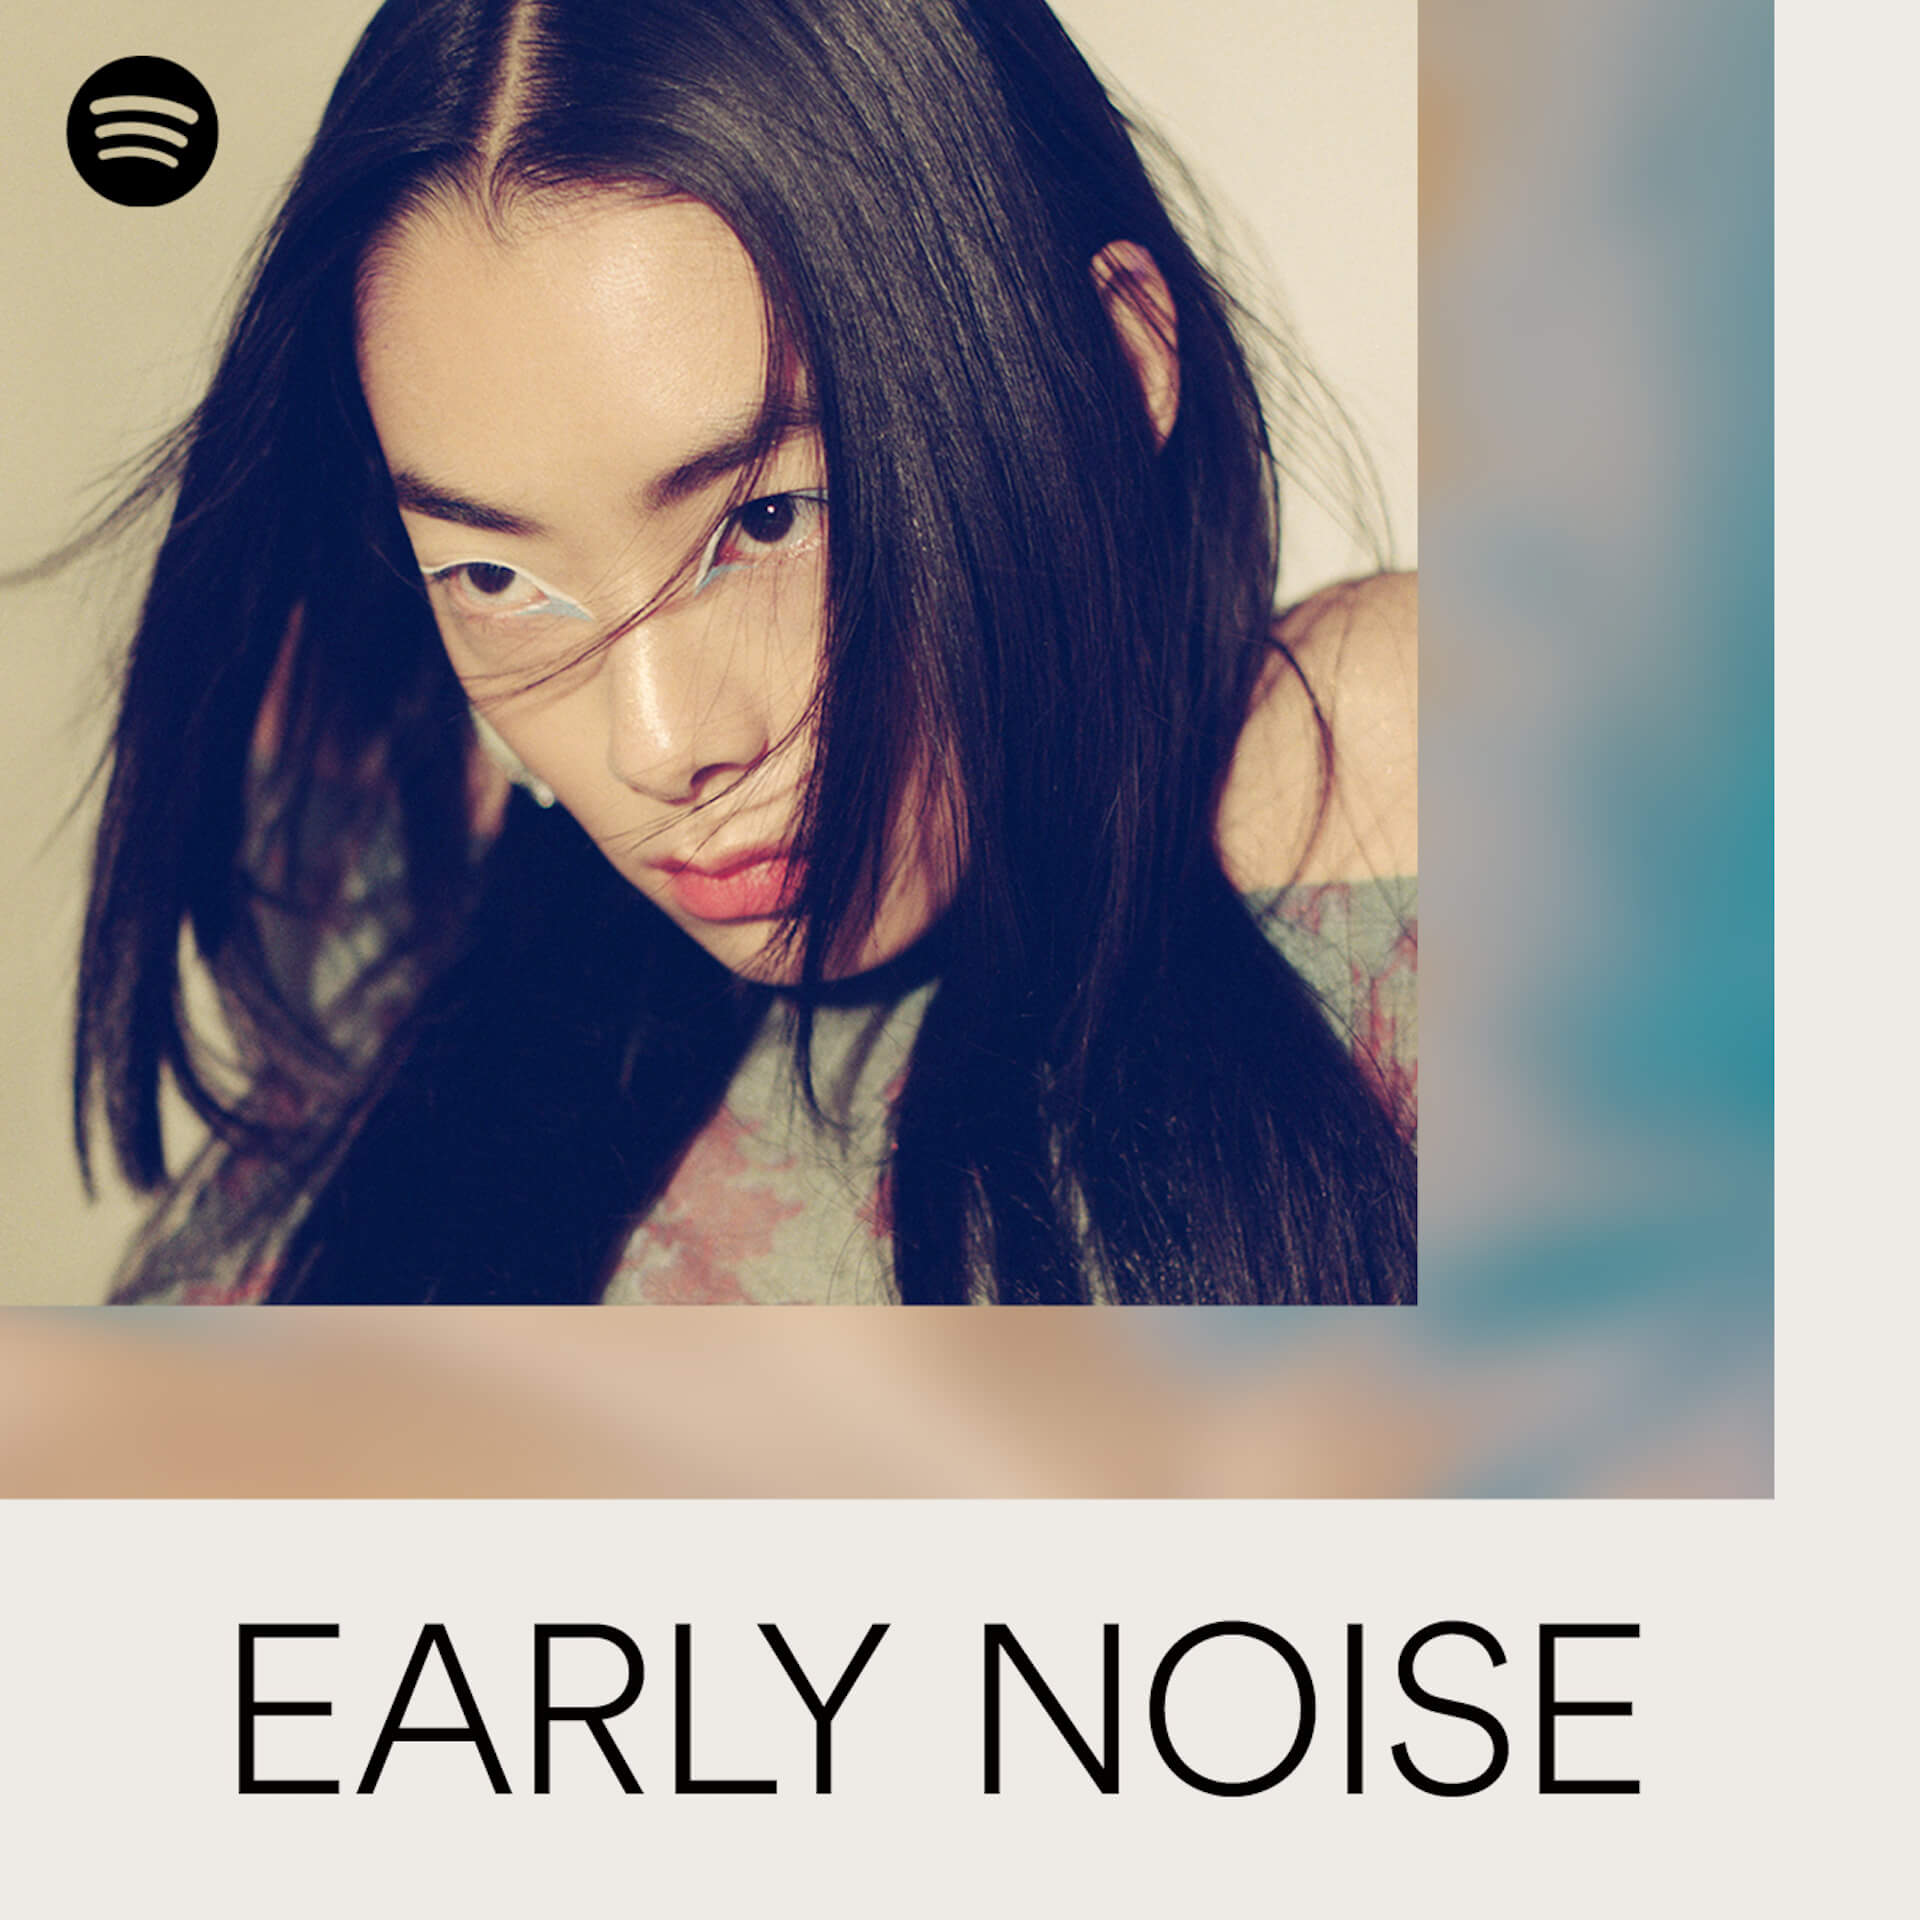 SpotifyがVaundy、Rina Sawayama、藤井 風などが選出されたプログラム『Early Noise』のコーナーを新たに開設！オリジナルプレイリストなども展開 music2020918-spotify3